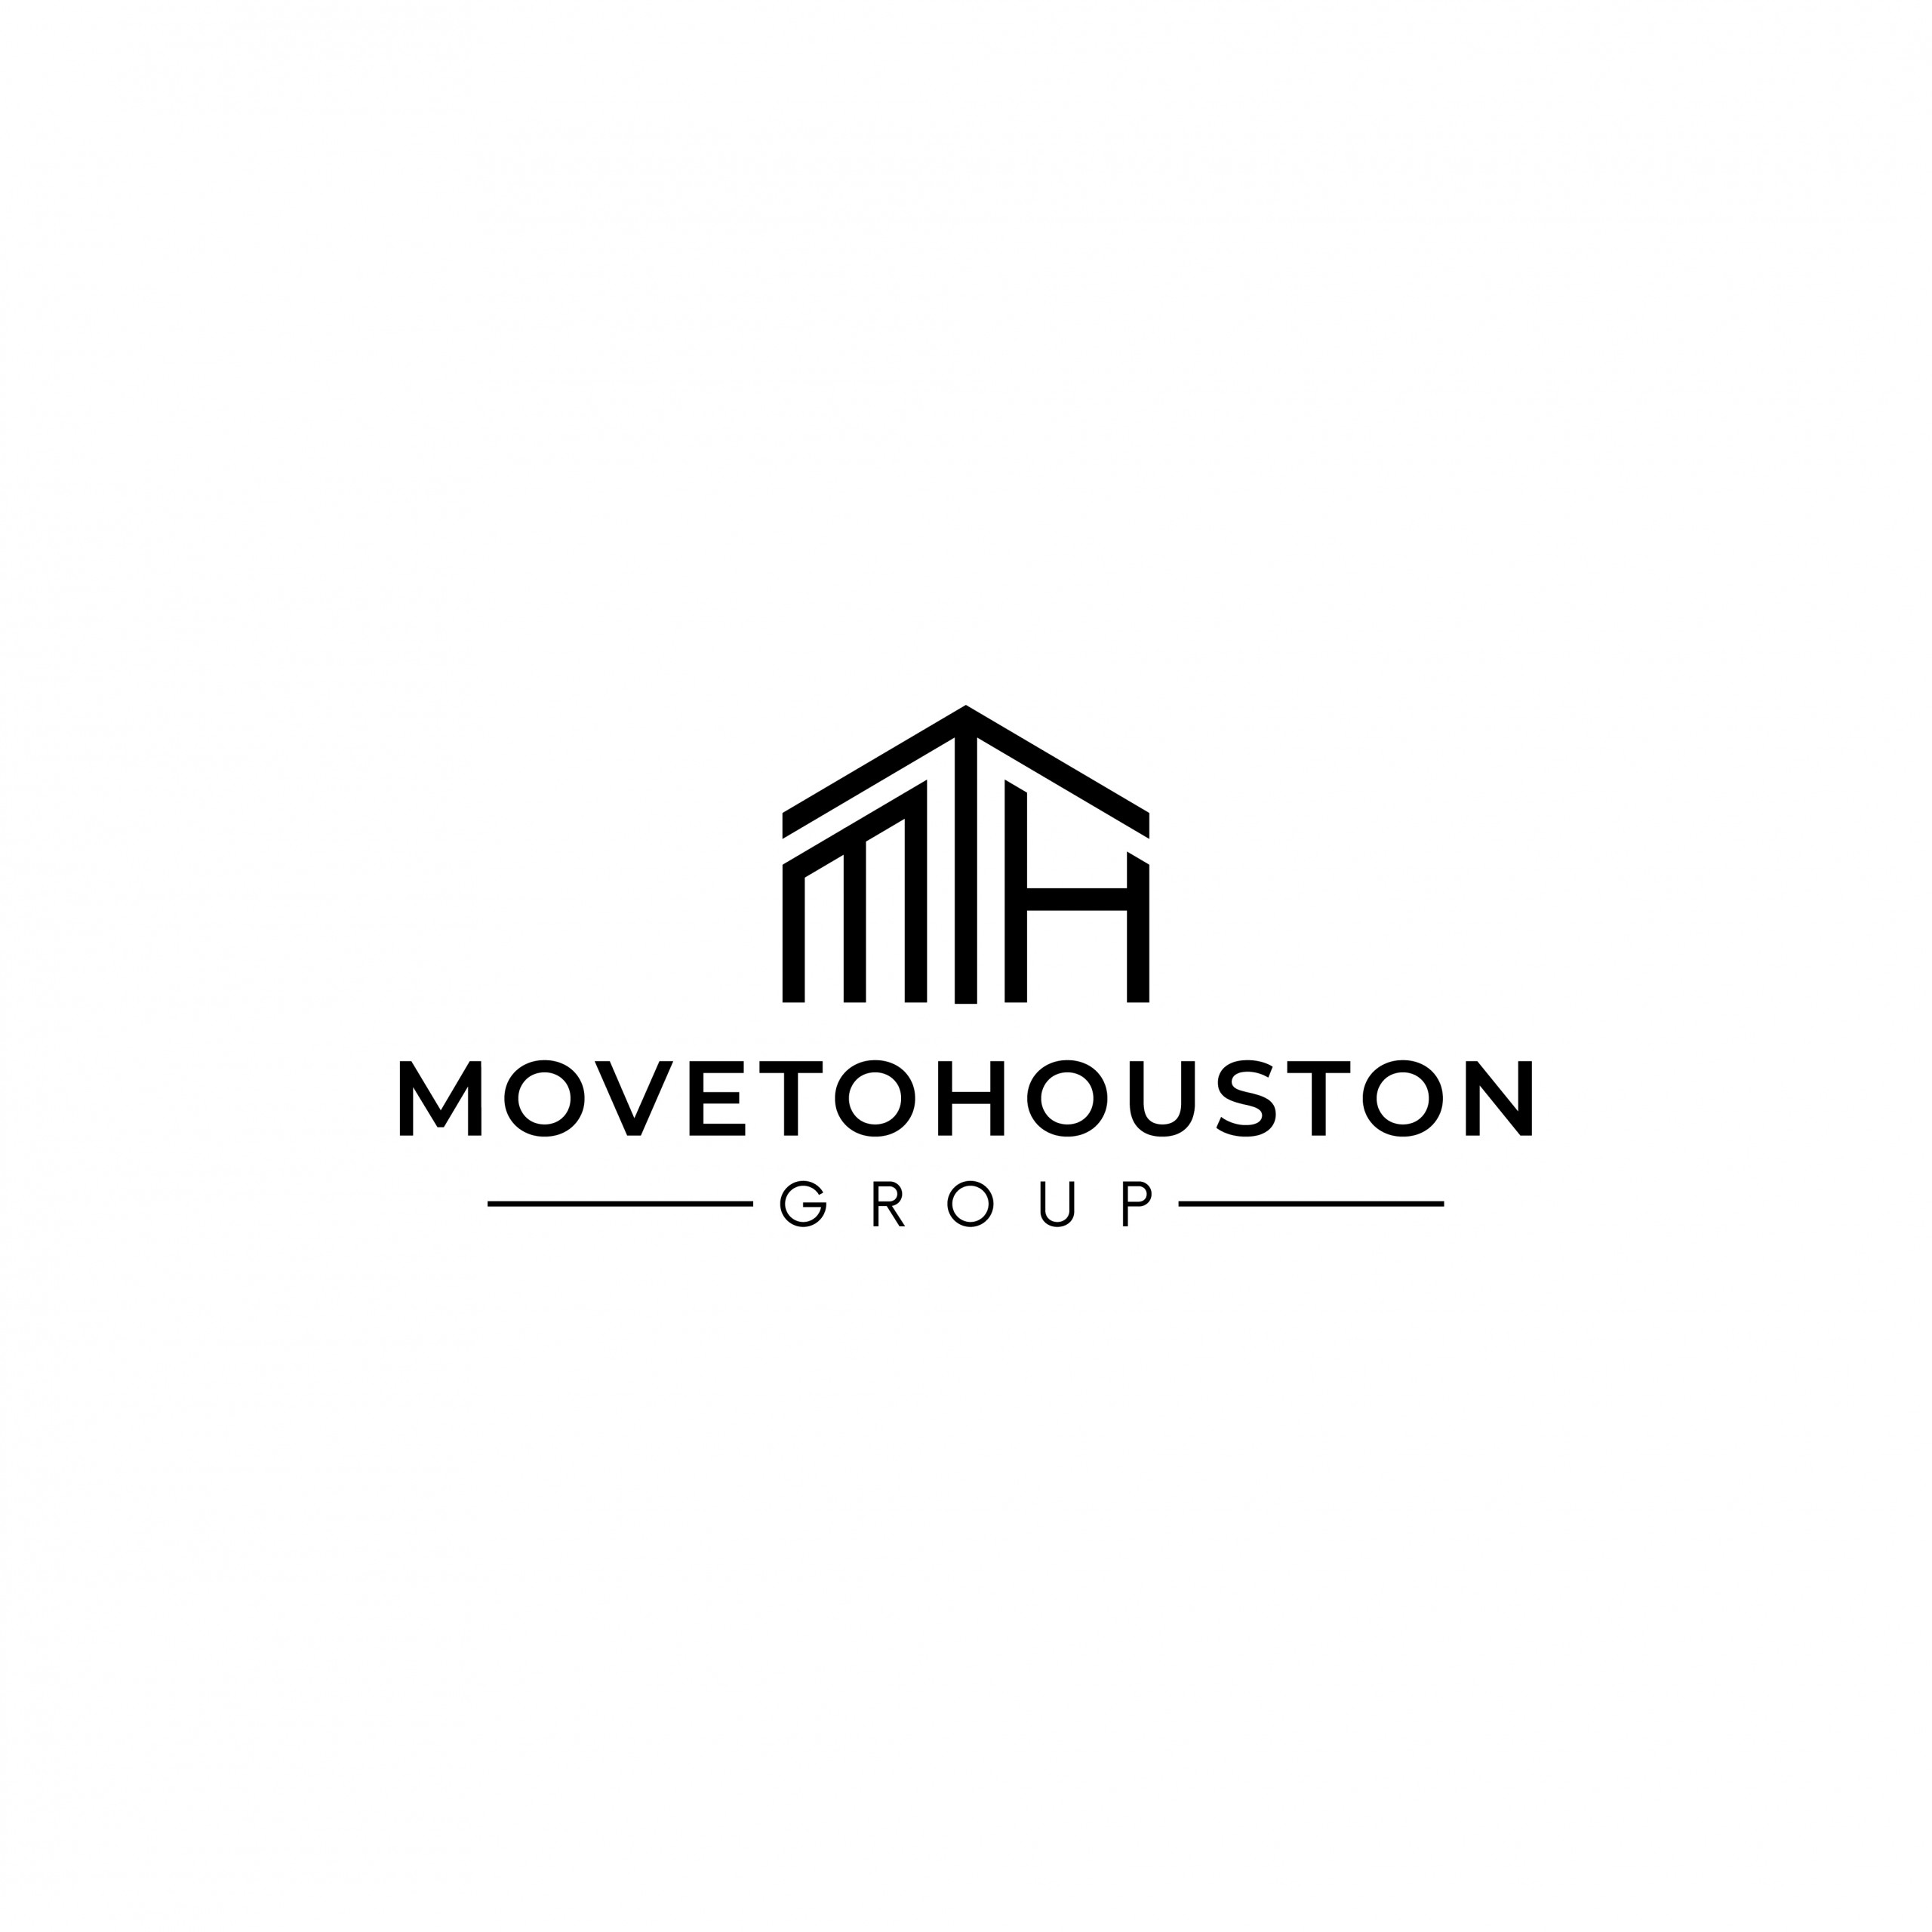 #MOVETOHOUSTON Group Logo